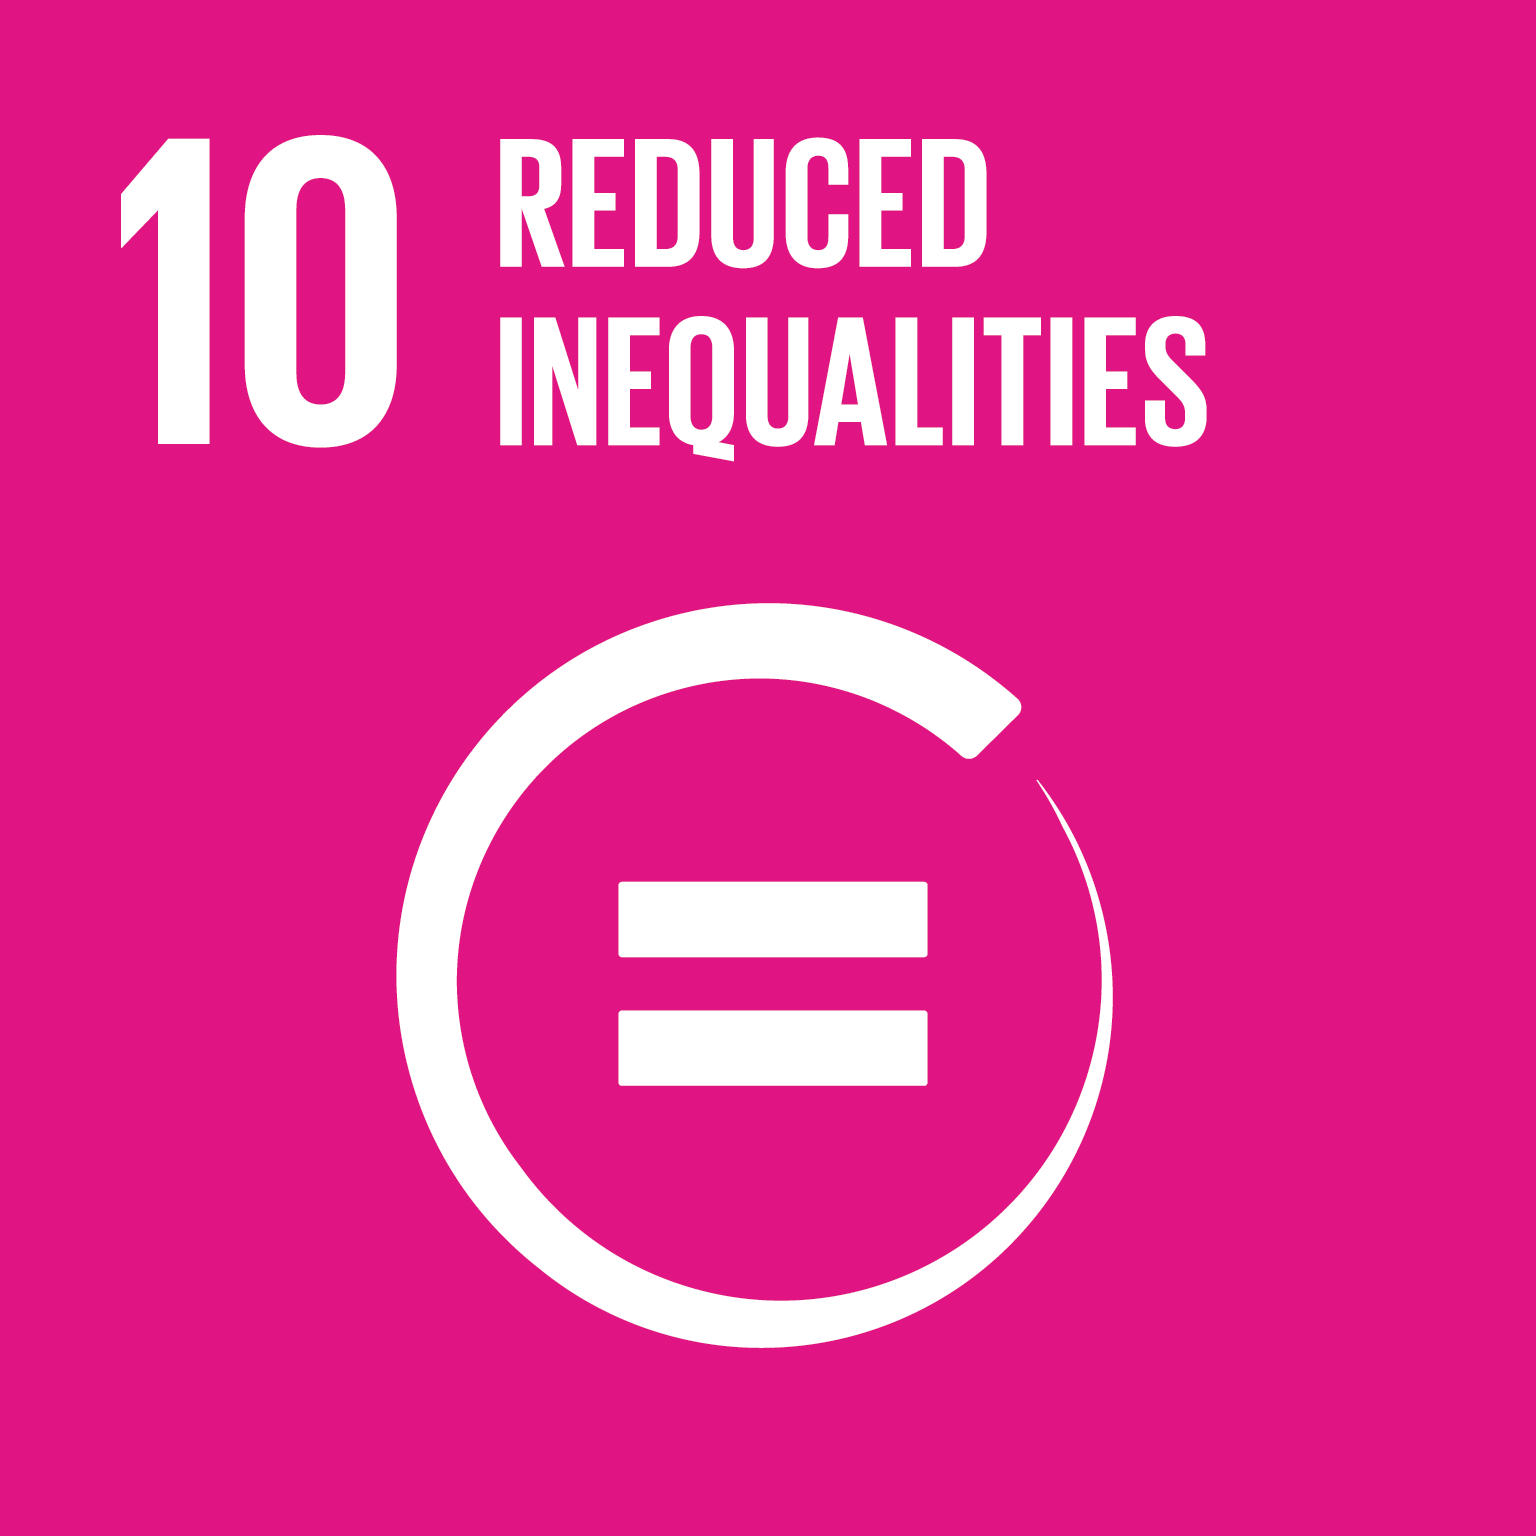 Goal 10 - reduce inequalities